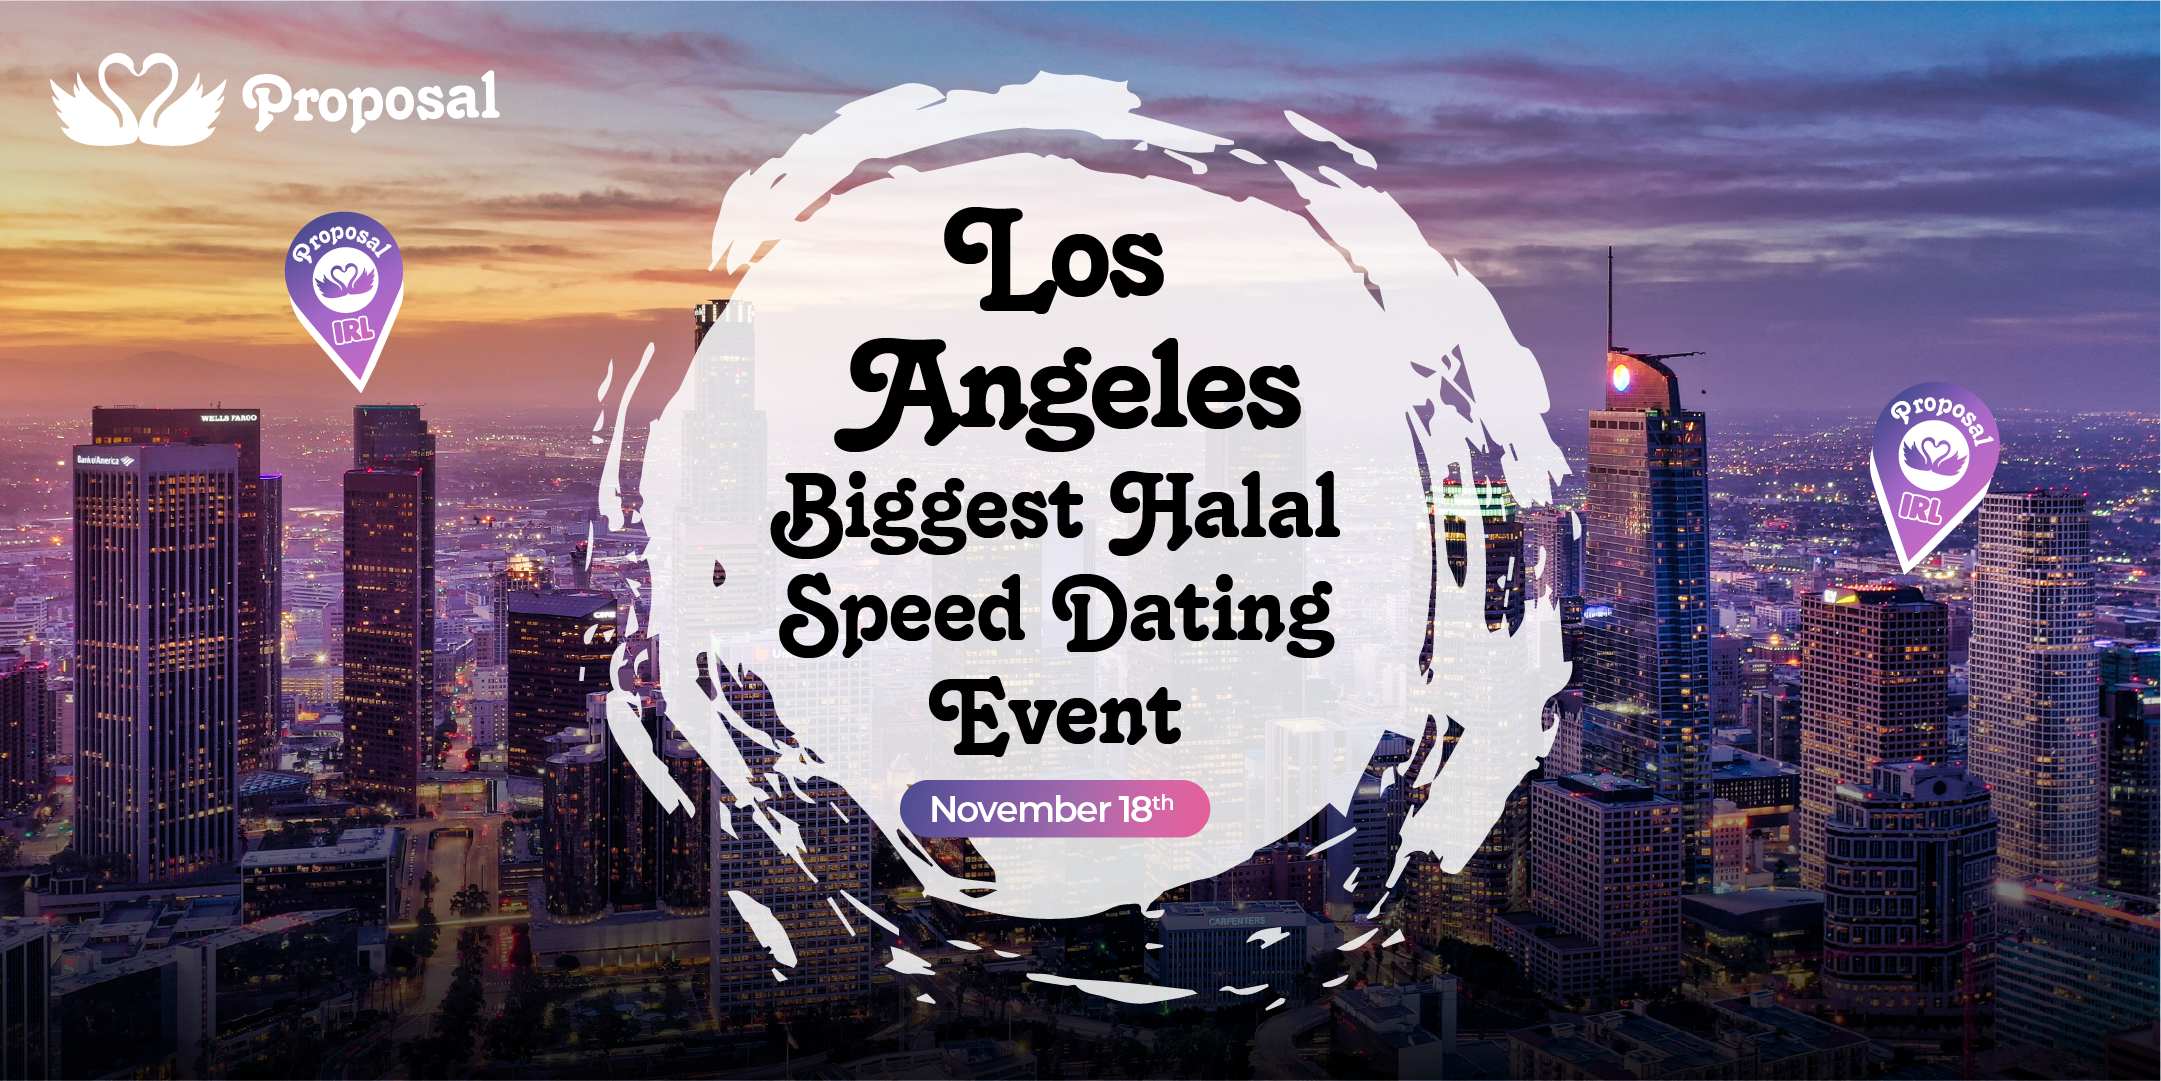 Proposal Presents BIGGEST HALAL Speed Dating Event LA